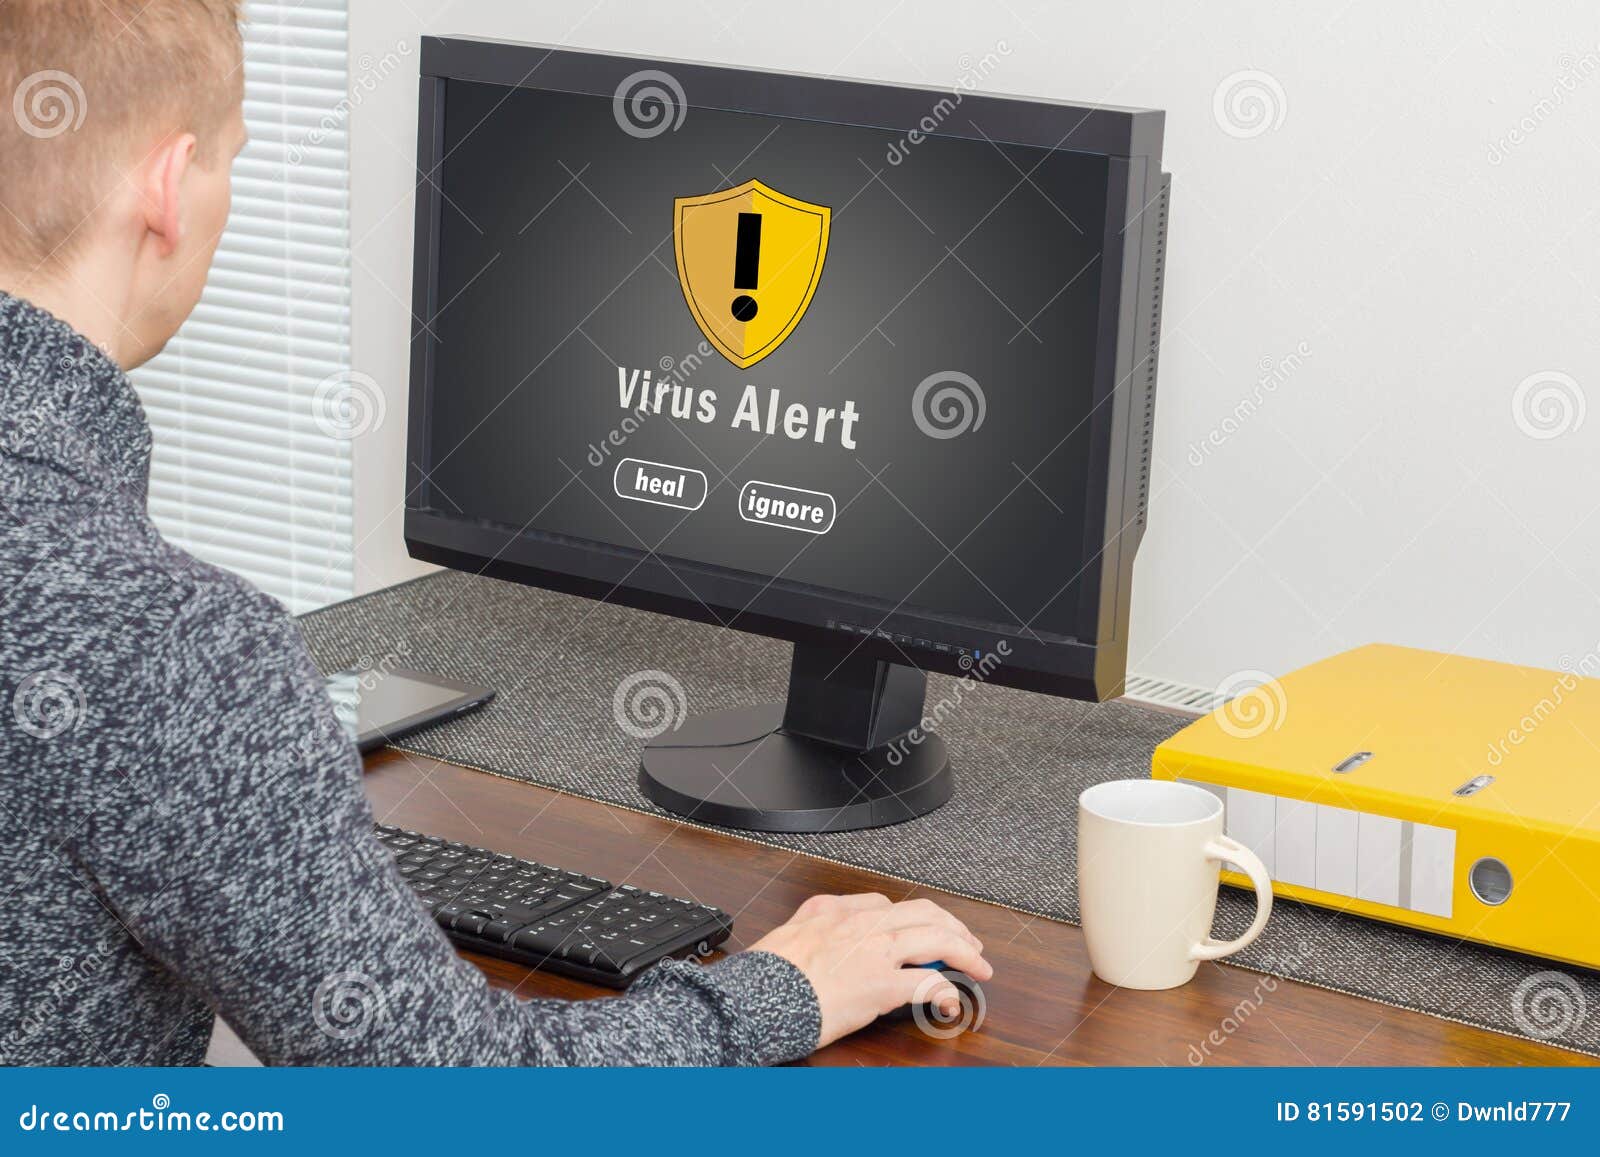 man using computer with computer virus alert